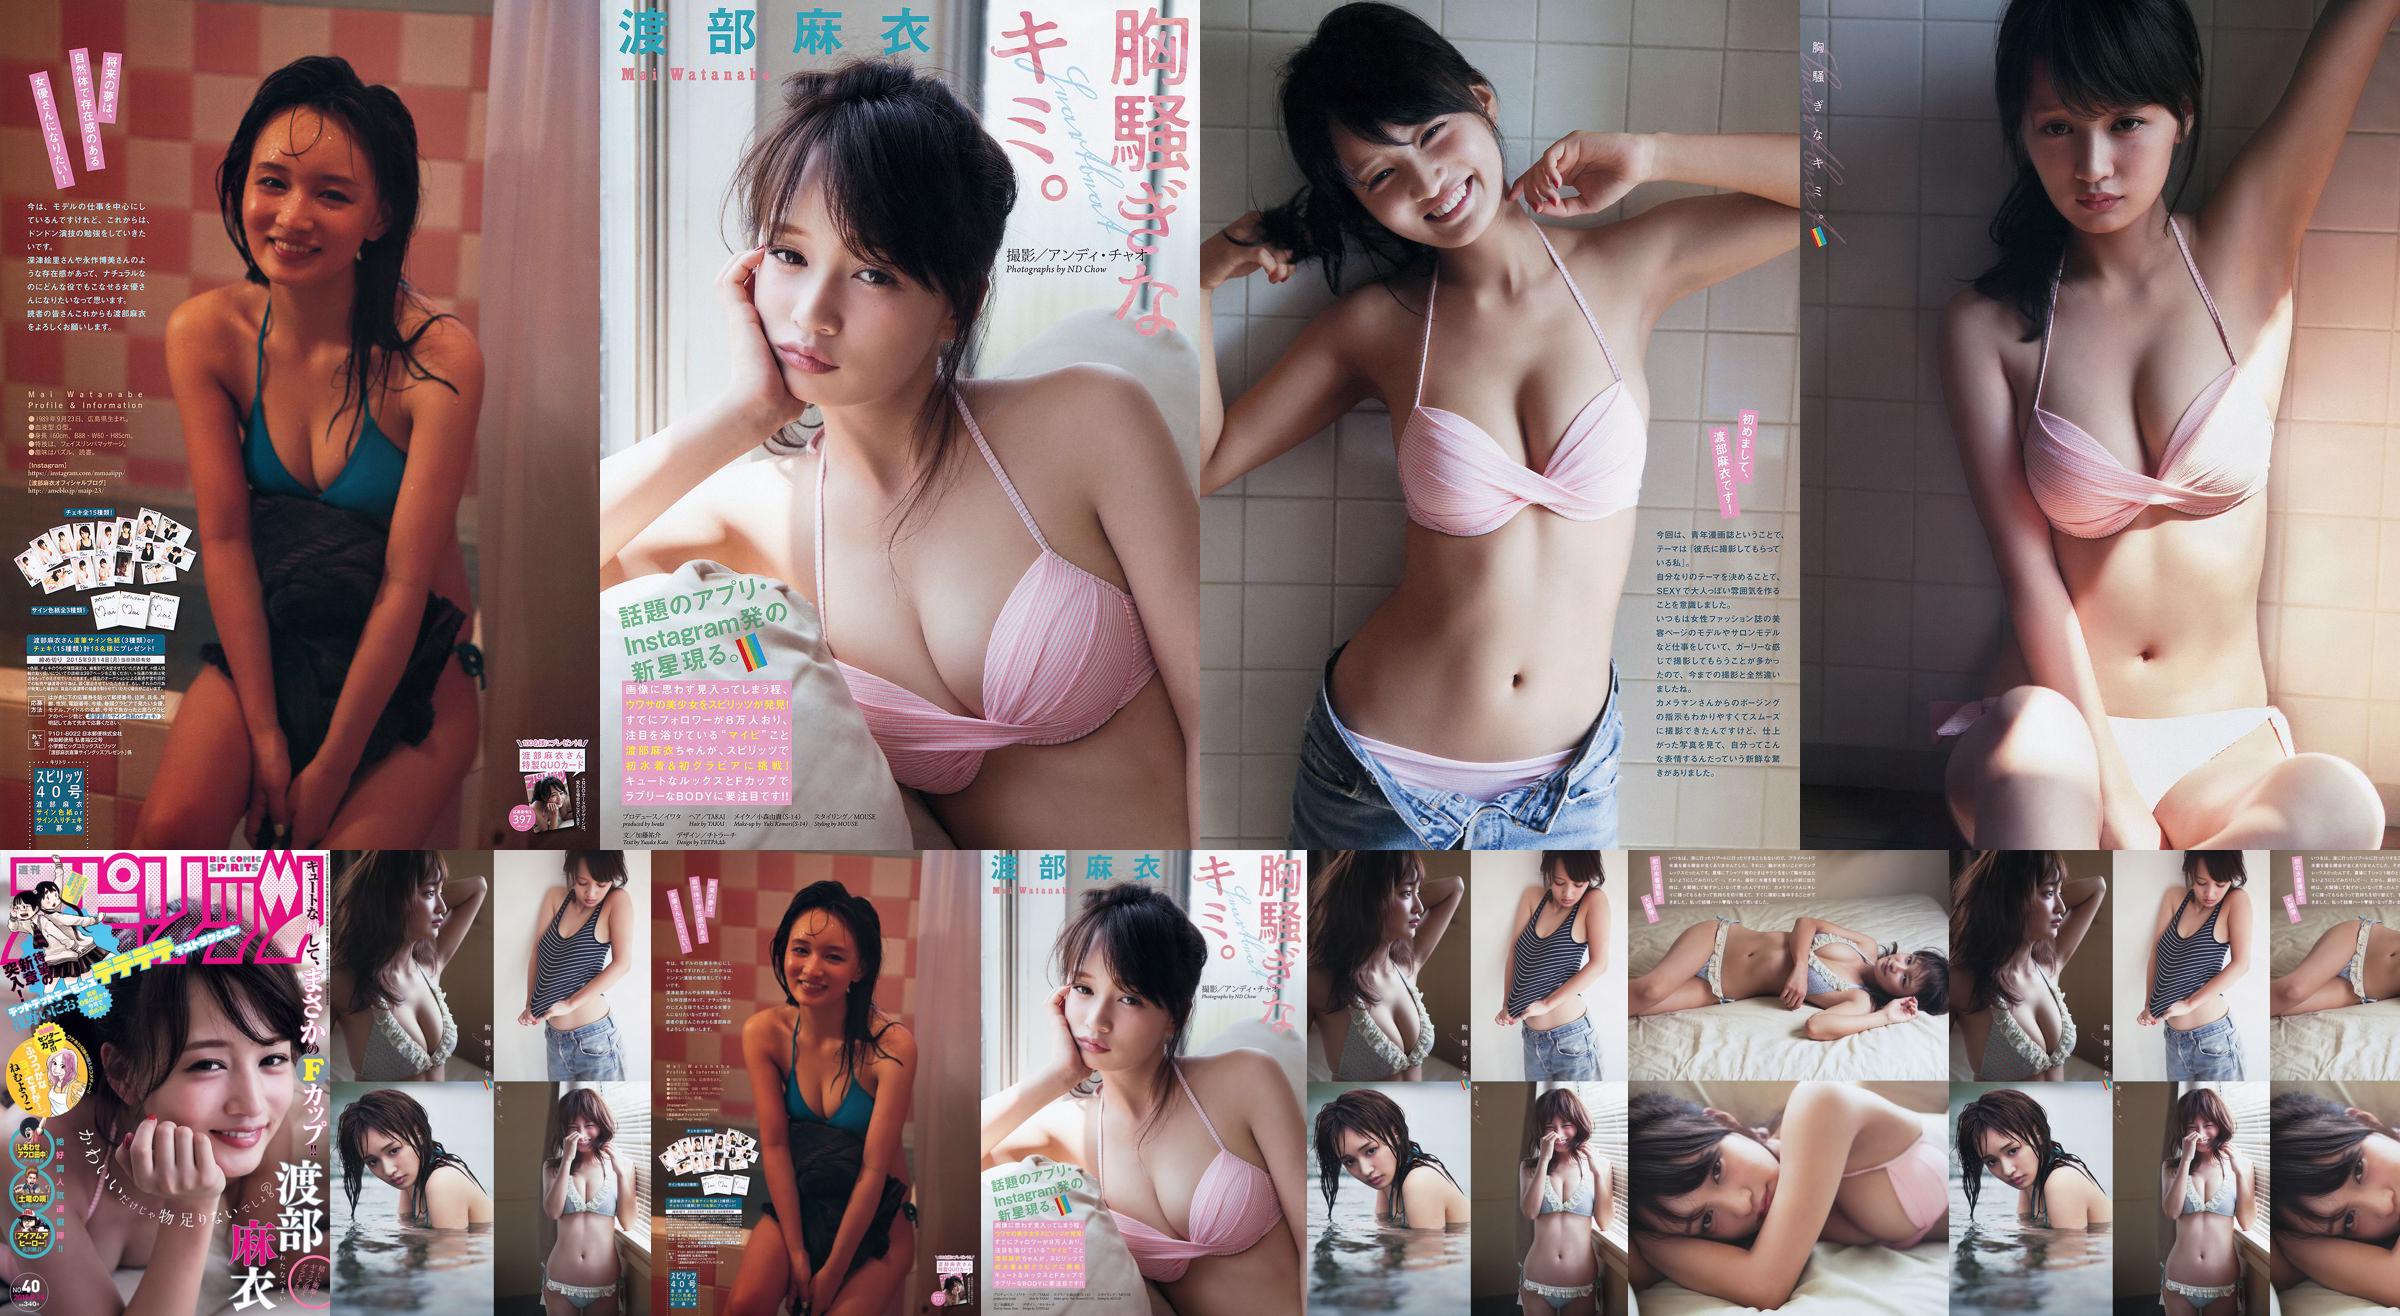 [Wöchentliche große Comic-Spirituosen] Watanabe Mai 2015 Nr. 40 Fotomagazin No.b95773 Seite 4